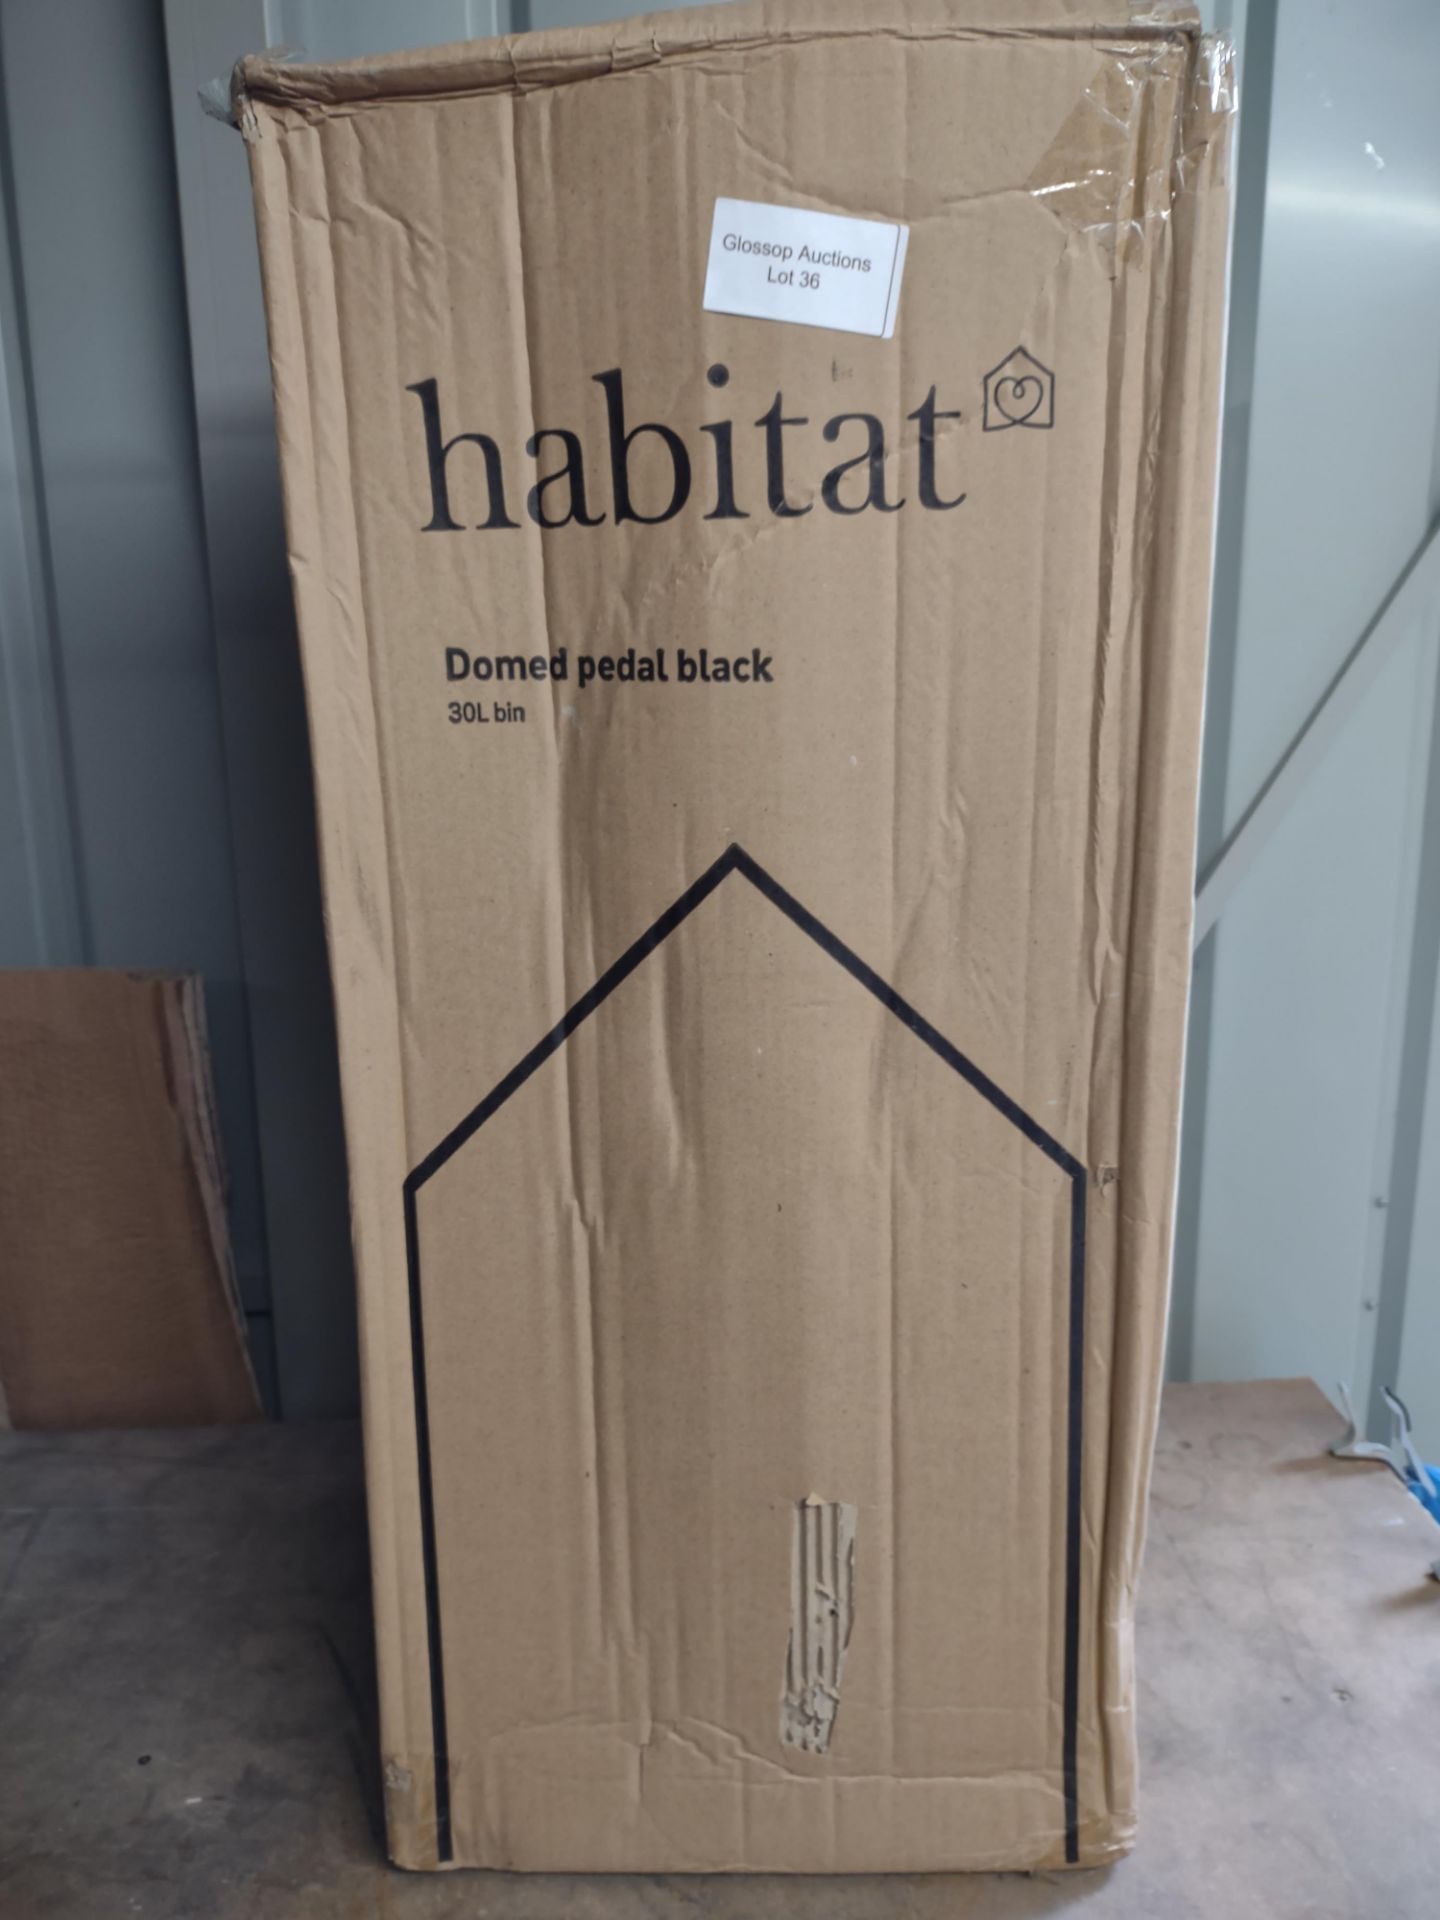 Habitat 30 Litre Domed Pedal bin - Black. RRP £30 - Grade U